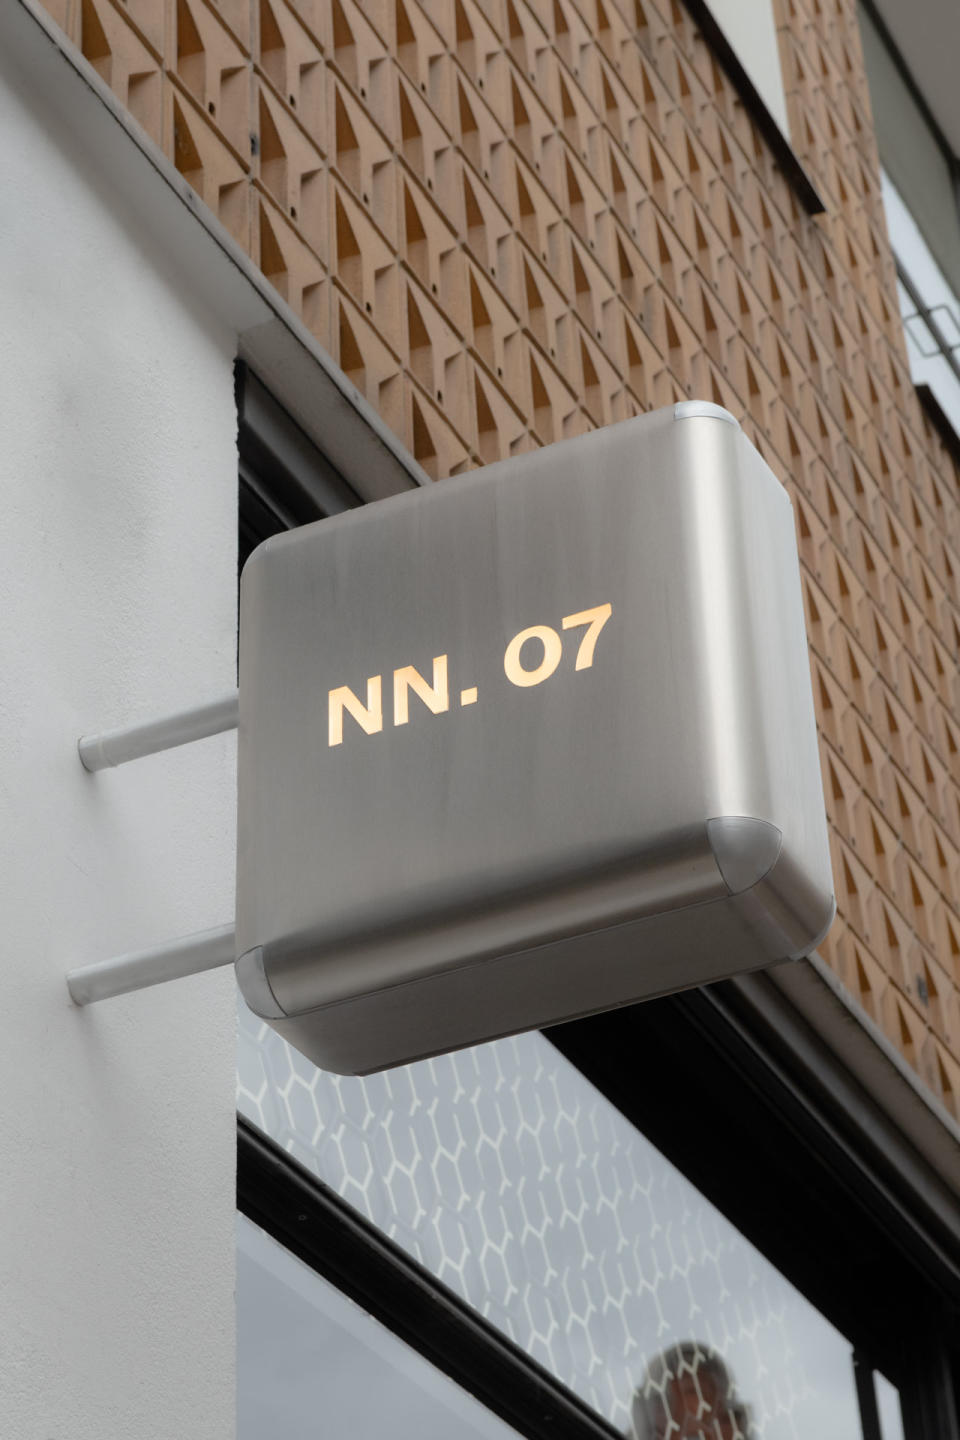 NN.07 store sign